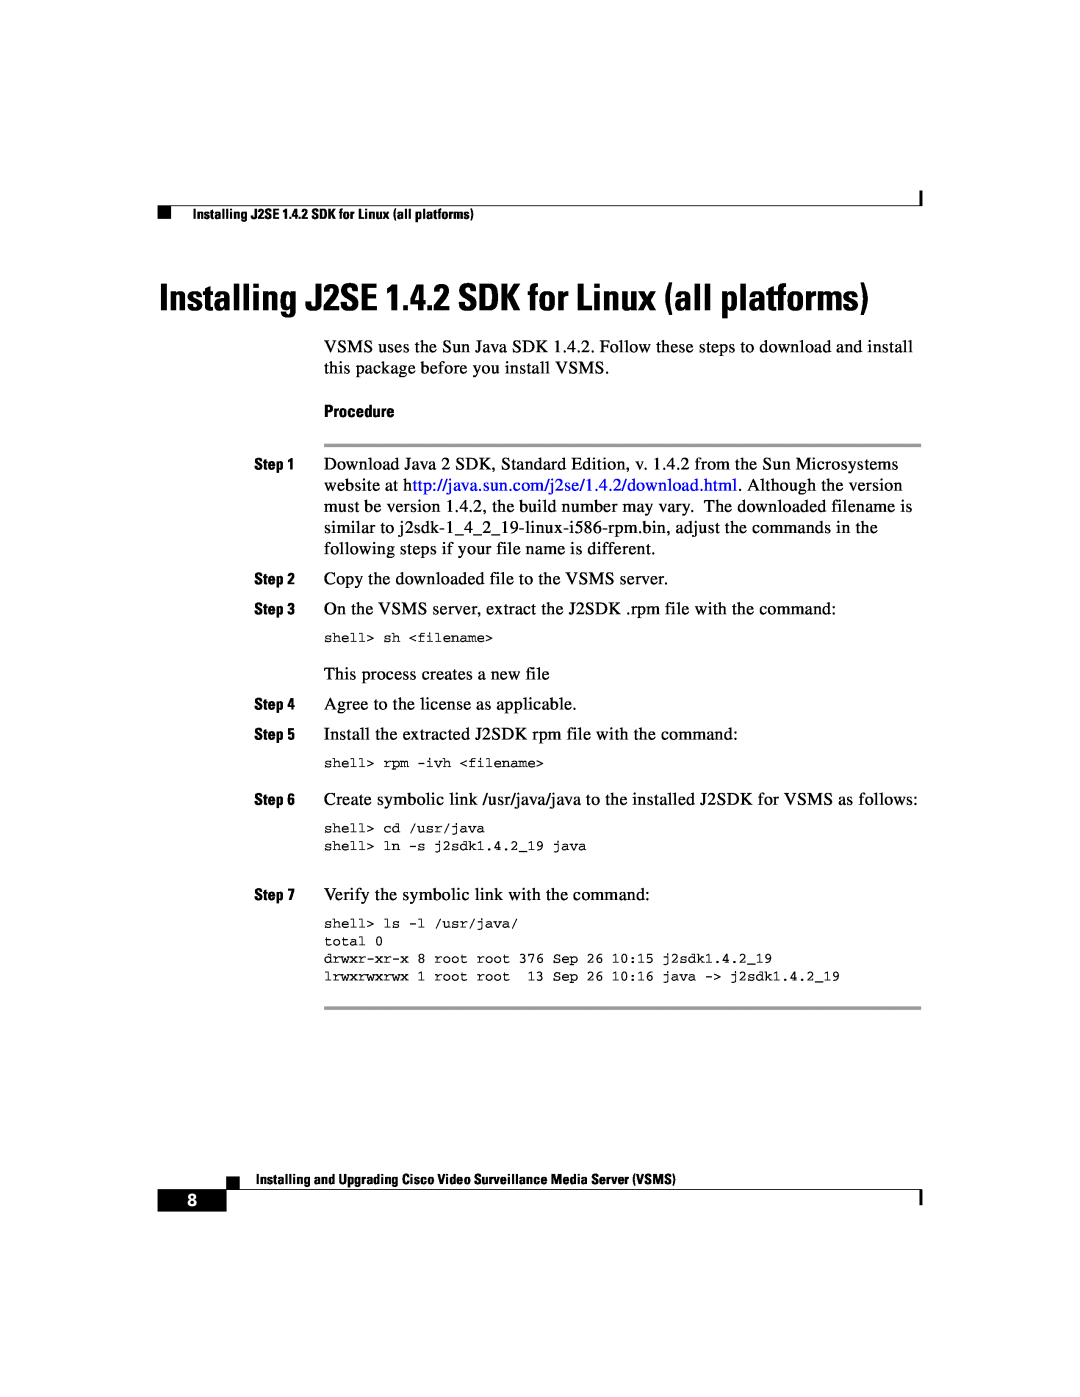 Cisco Systems Surveillance Media Server manual Installing J2SE 1.4.2 SDK for Linux all platforms, Procedure 